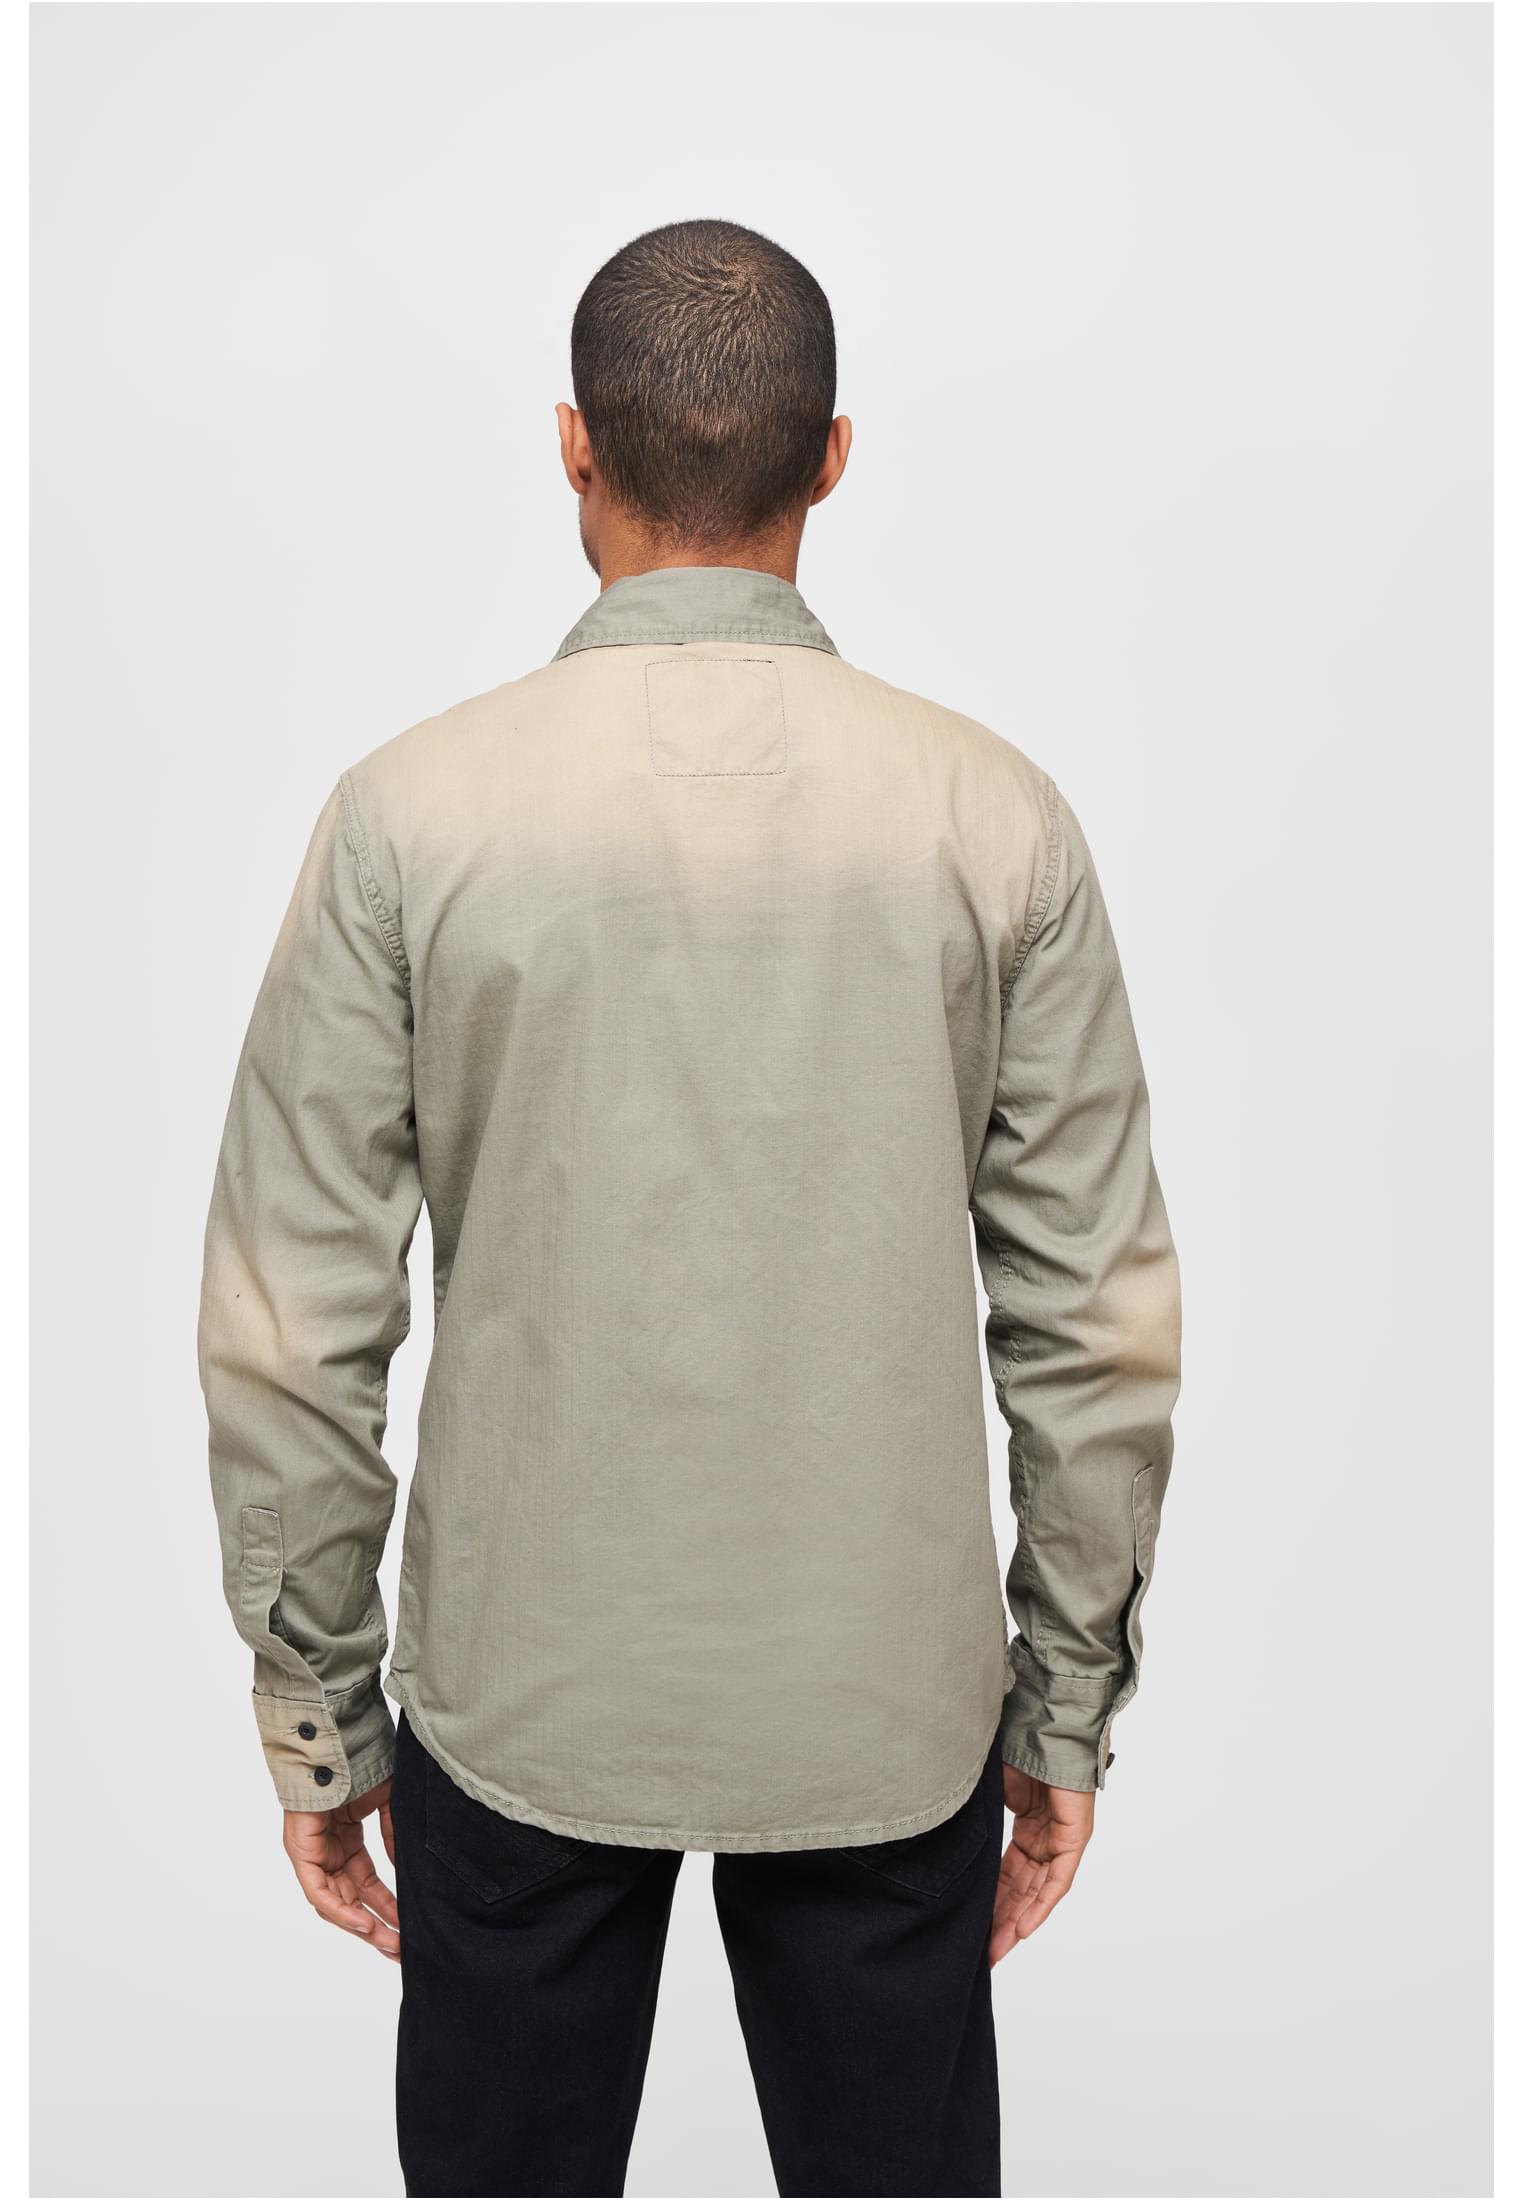 Hemden Hardee Denim Shirt in Farbe olive grey